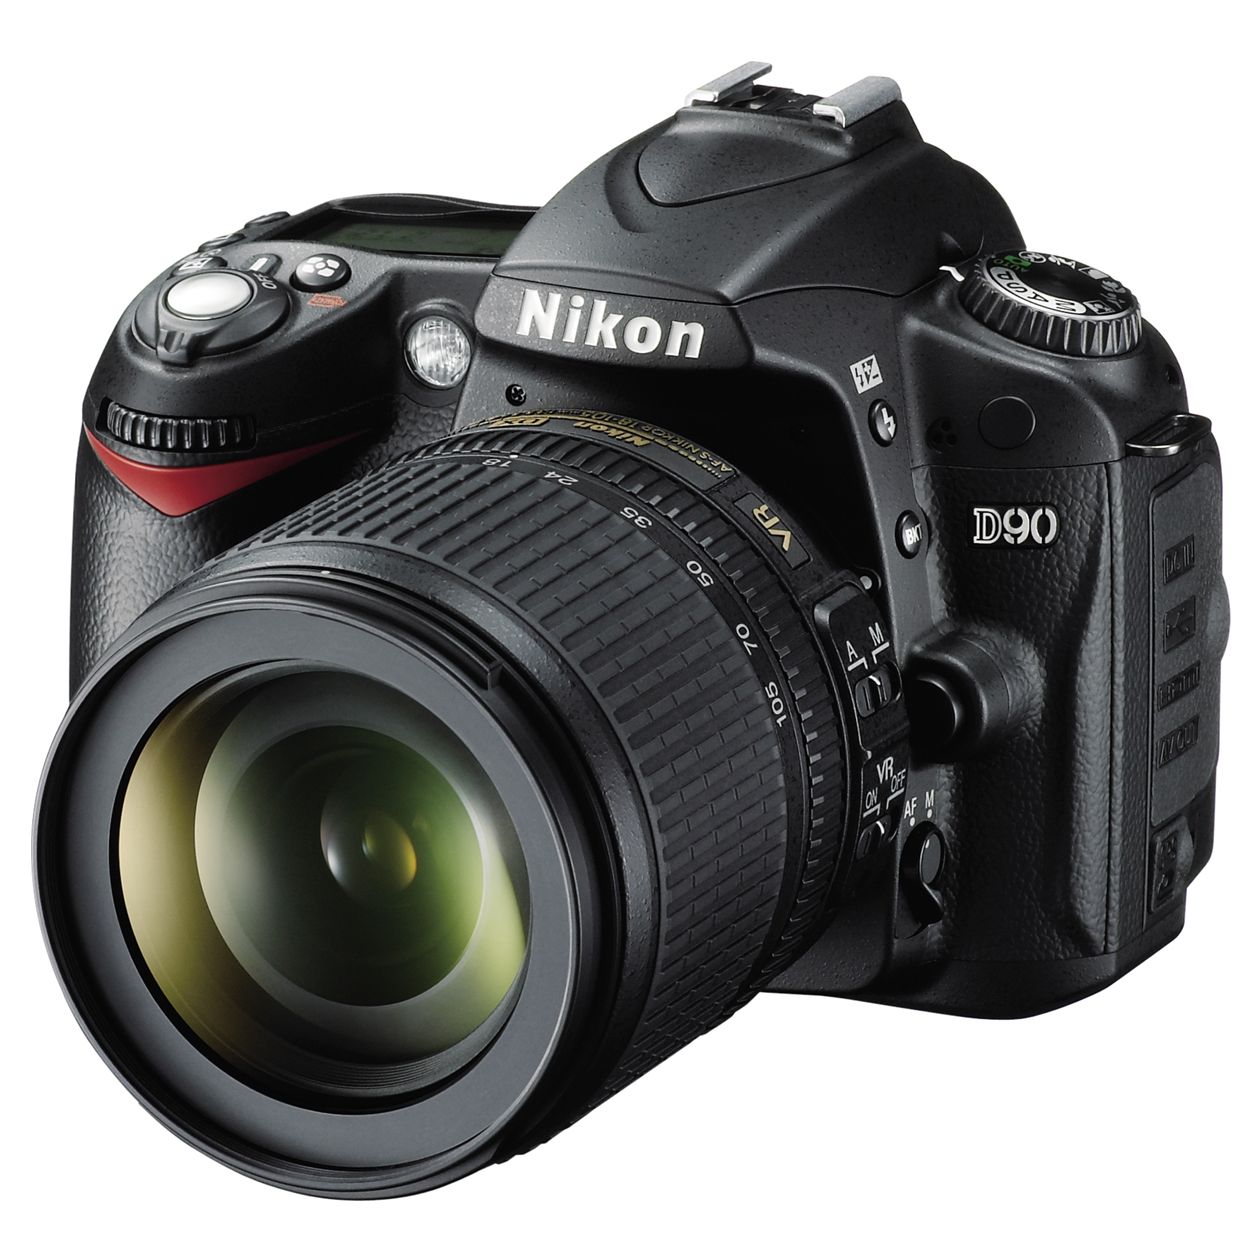 Nikon D90 Digital SLR Camera with 18-105mm Lens at John Lewis